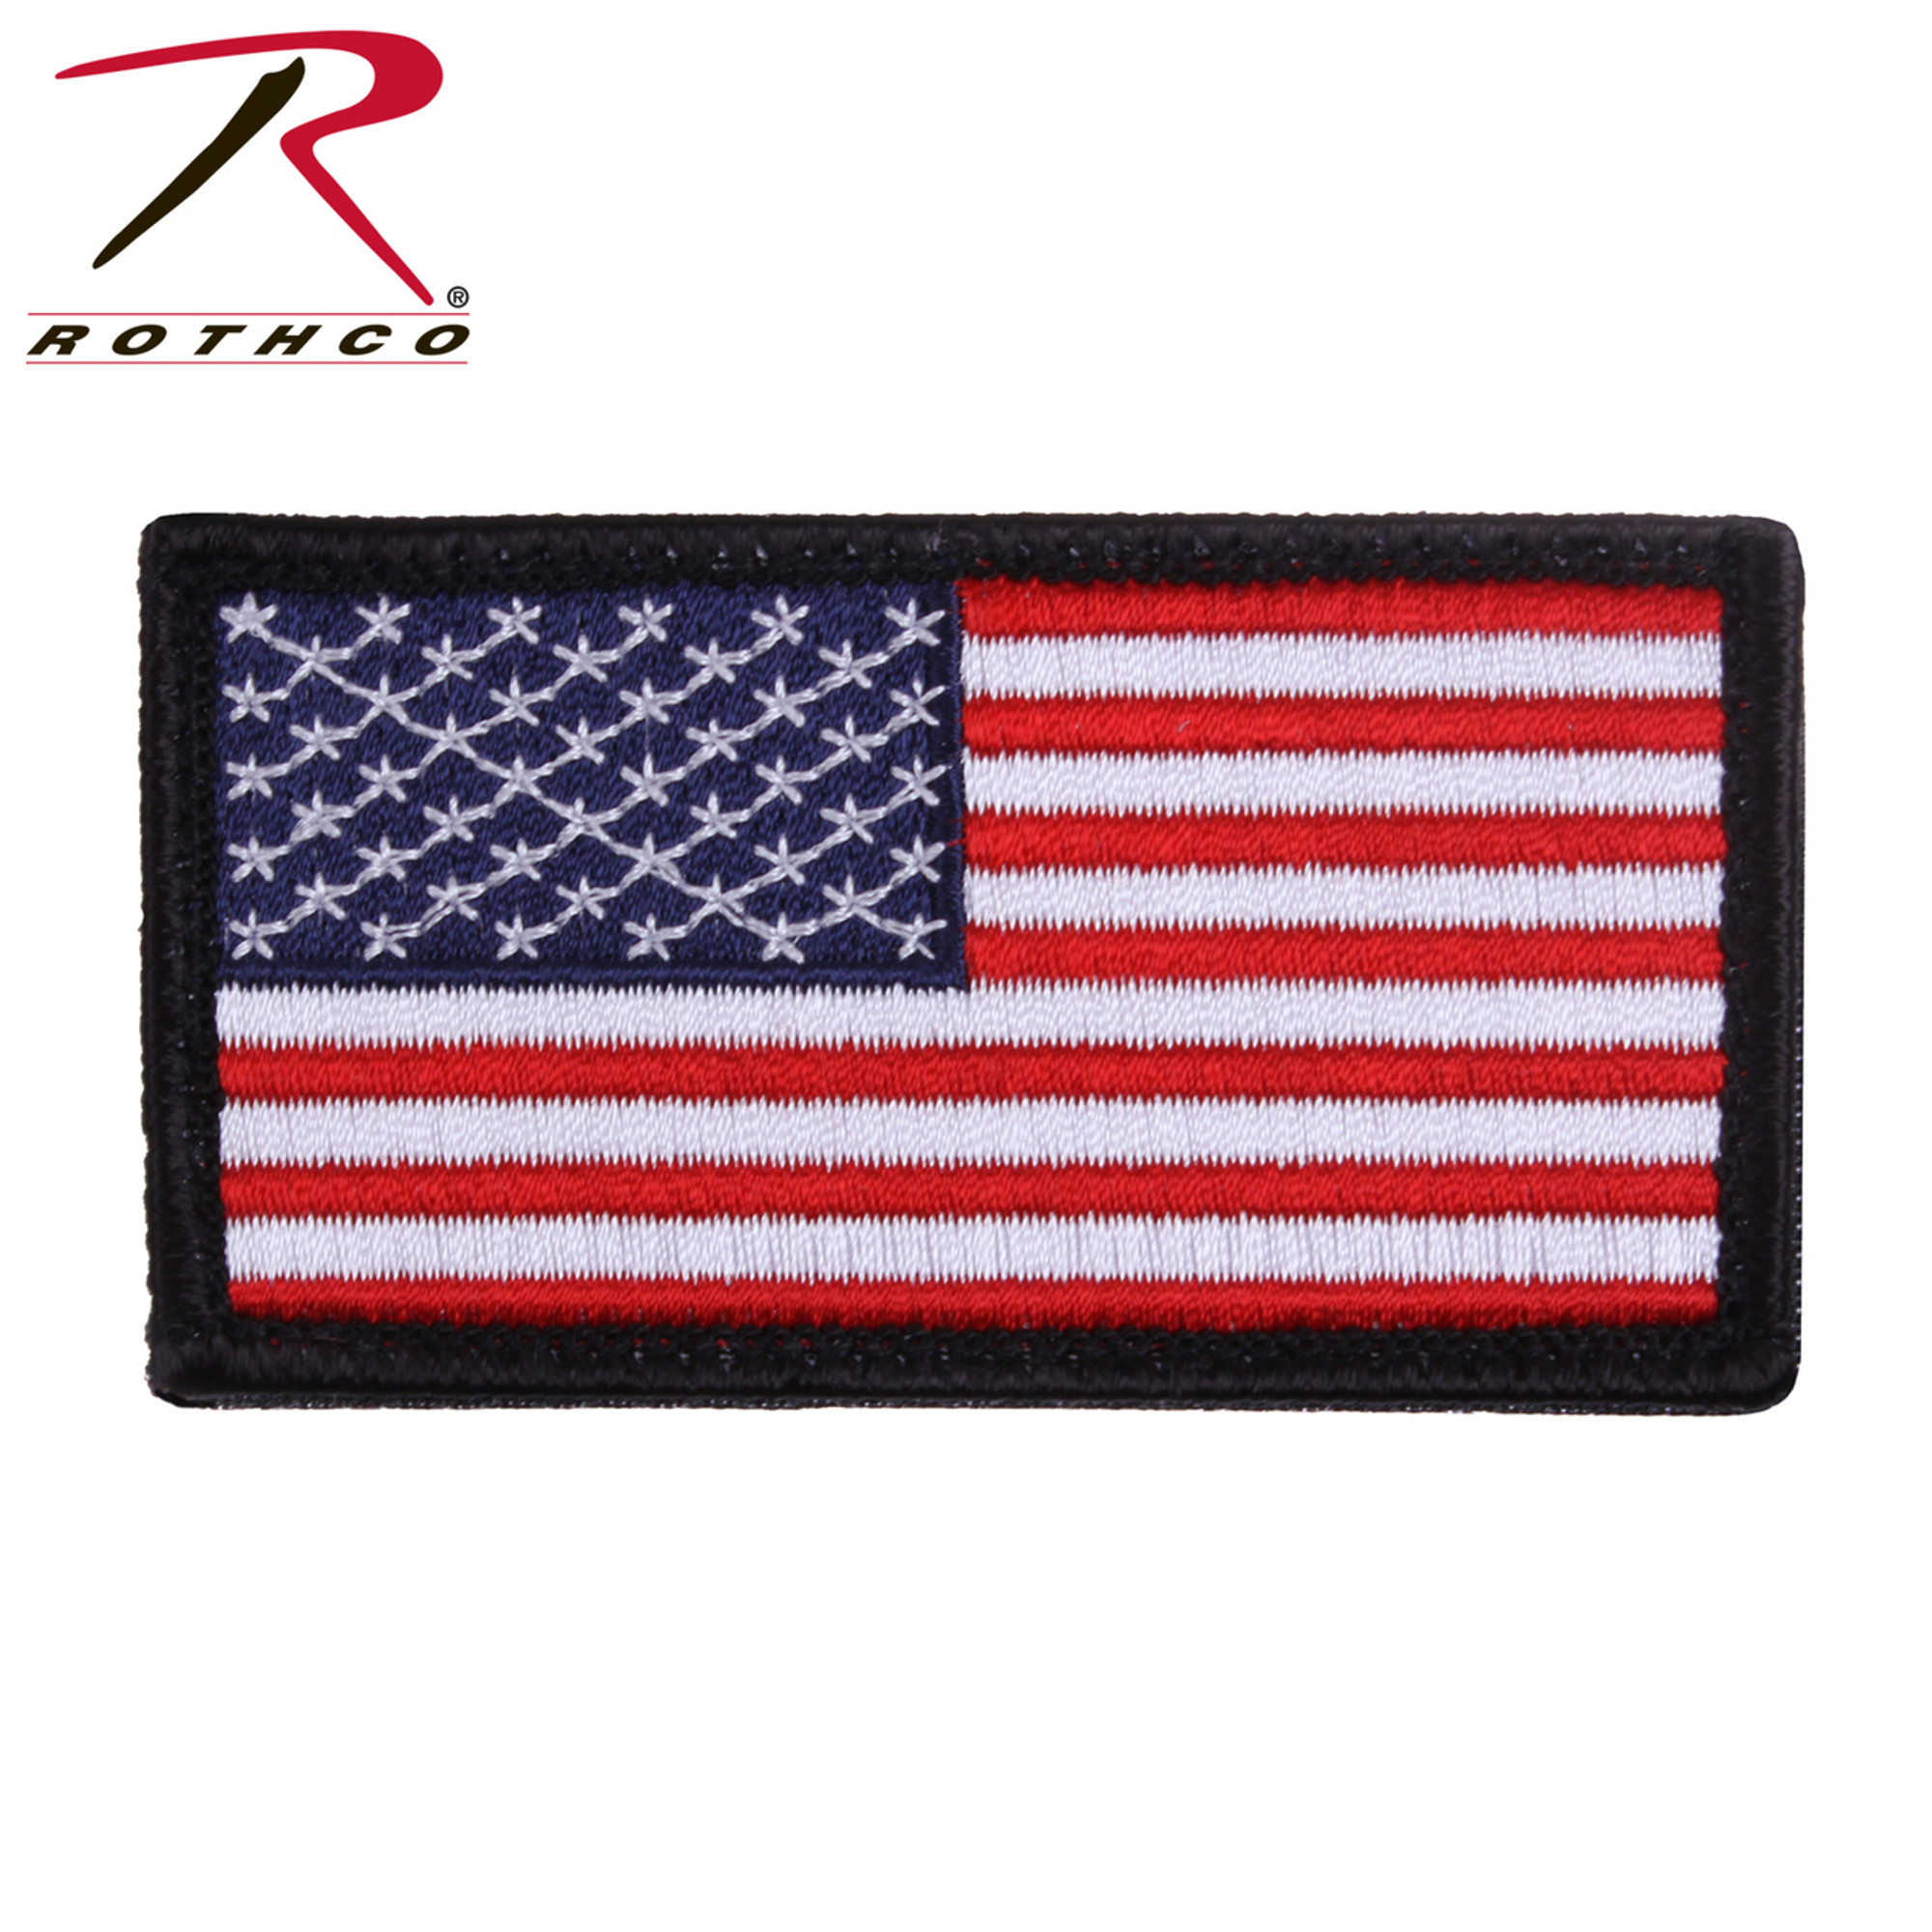 Rothco American Flag Patch - Hook Back - Black Border